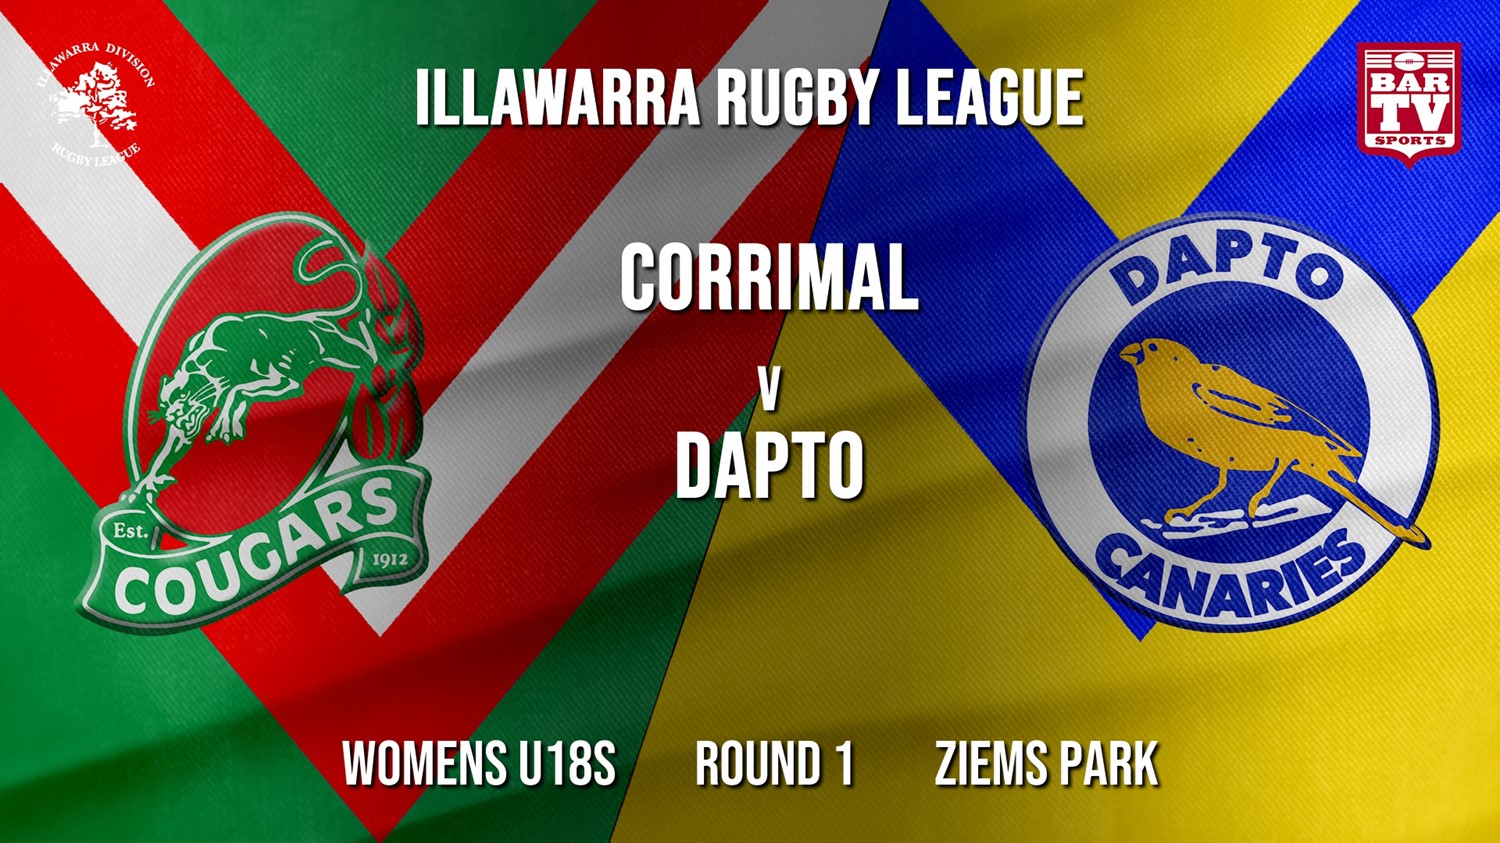 IRL Round 1 - Womens U18s - Corrimal Cougars v Dapto Canaries Minigame Slate Image